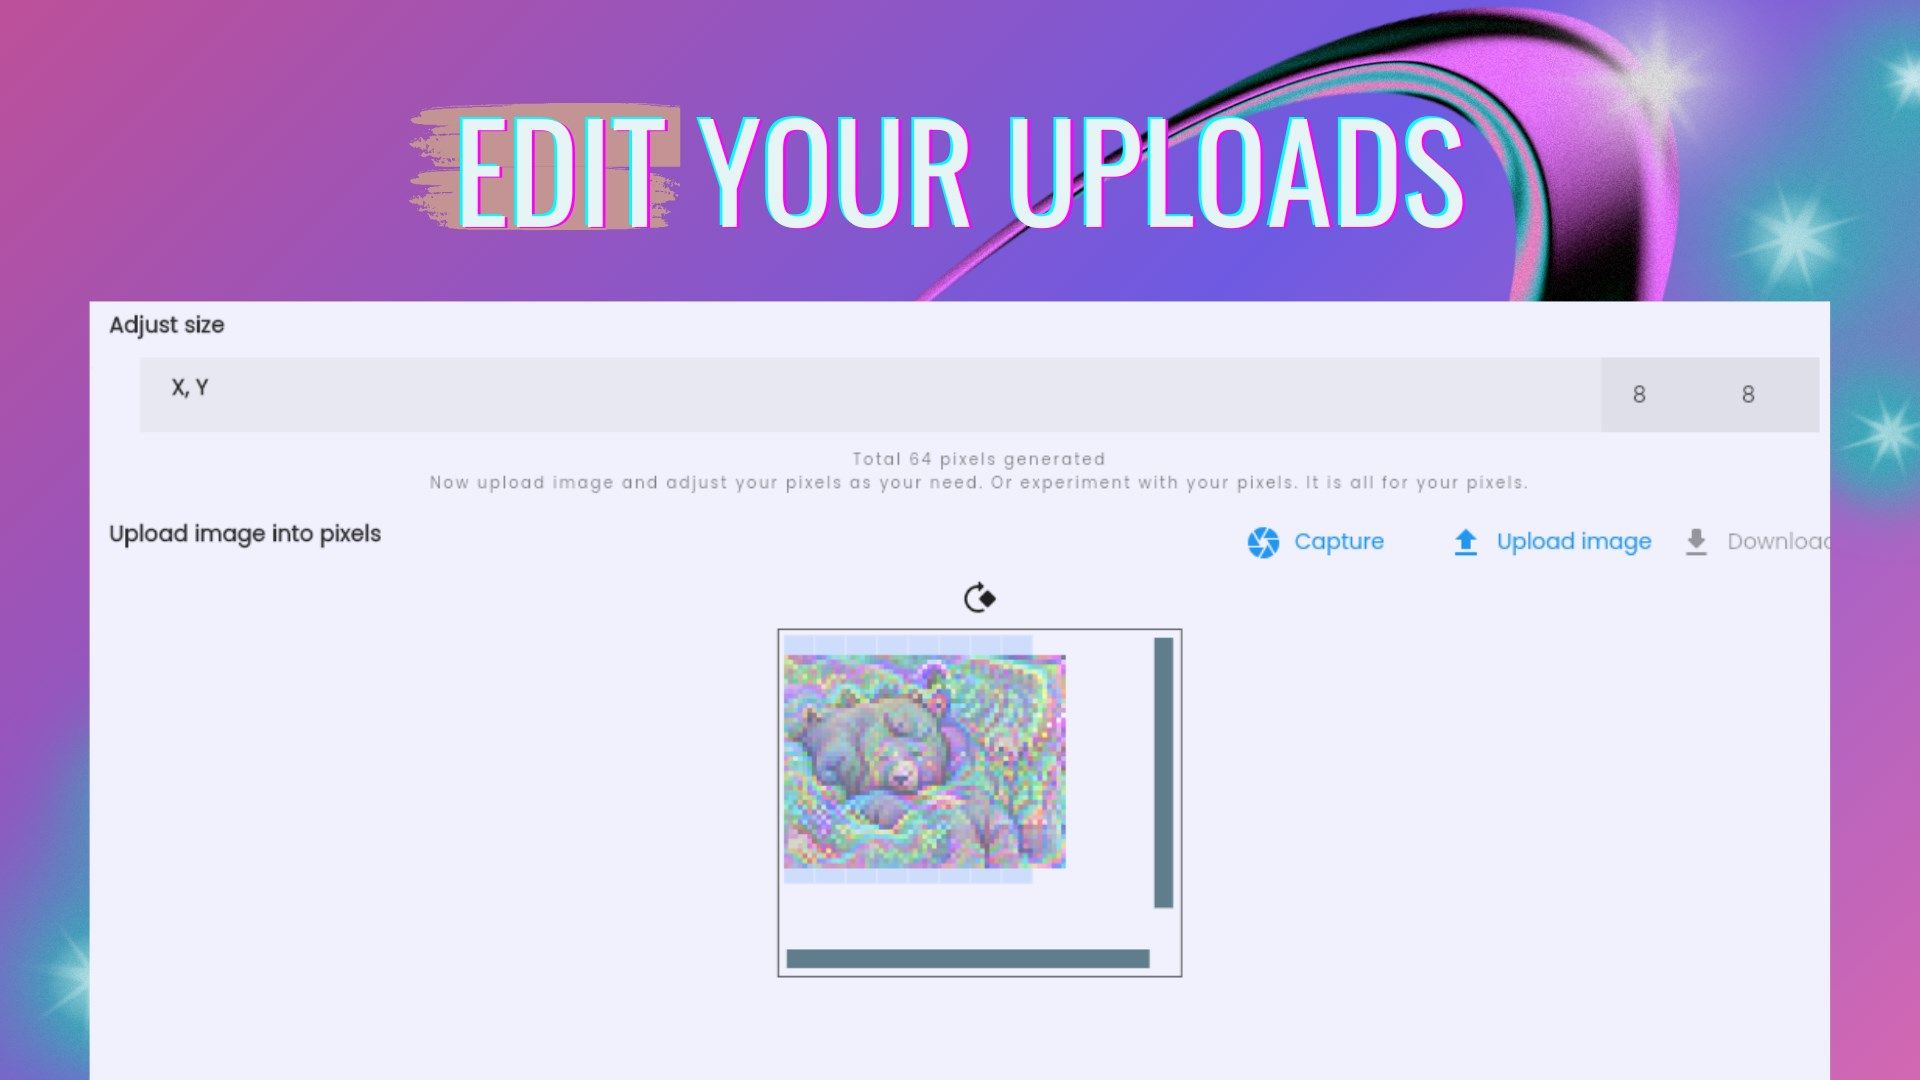 Edit your uploads